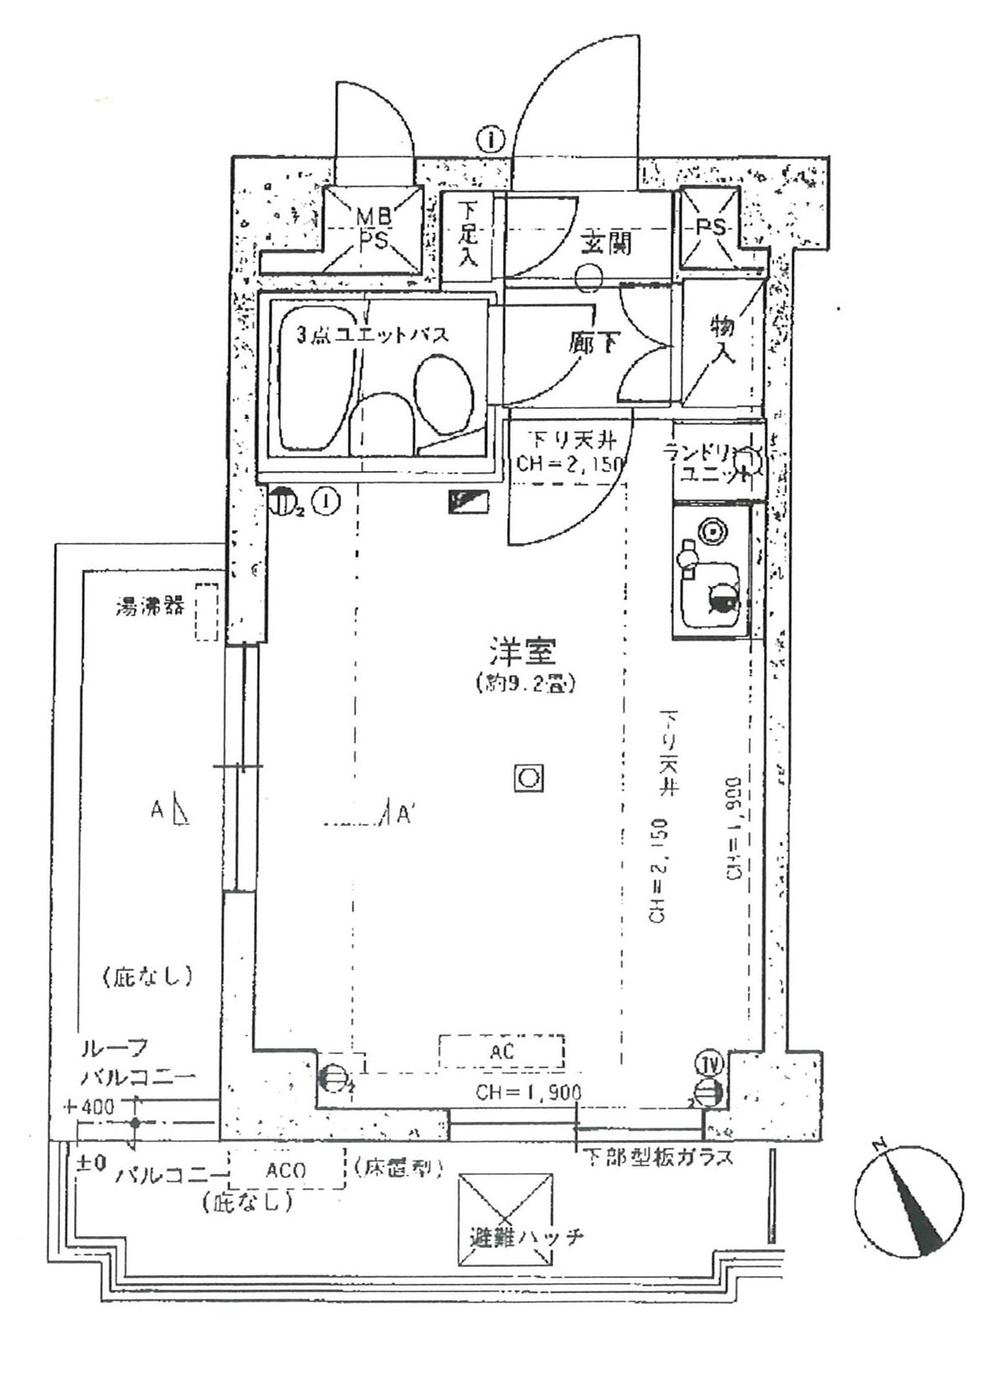 Floor plan. Price 4.8 million yen, Occupied area 21.04 sq m , Balcony area 8.75 sq m